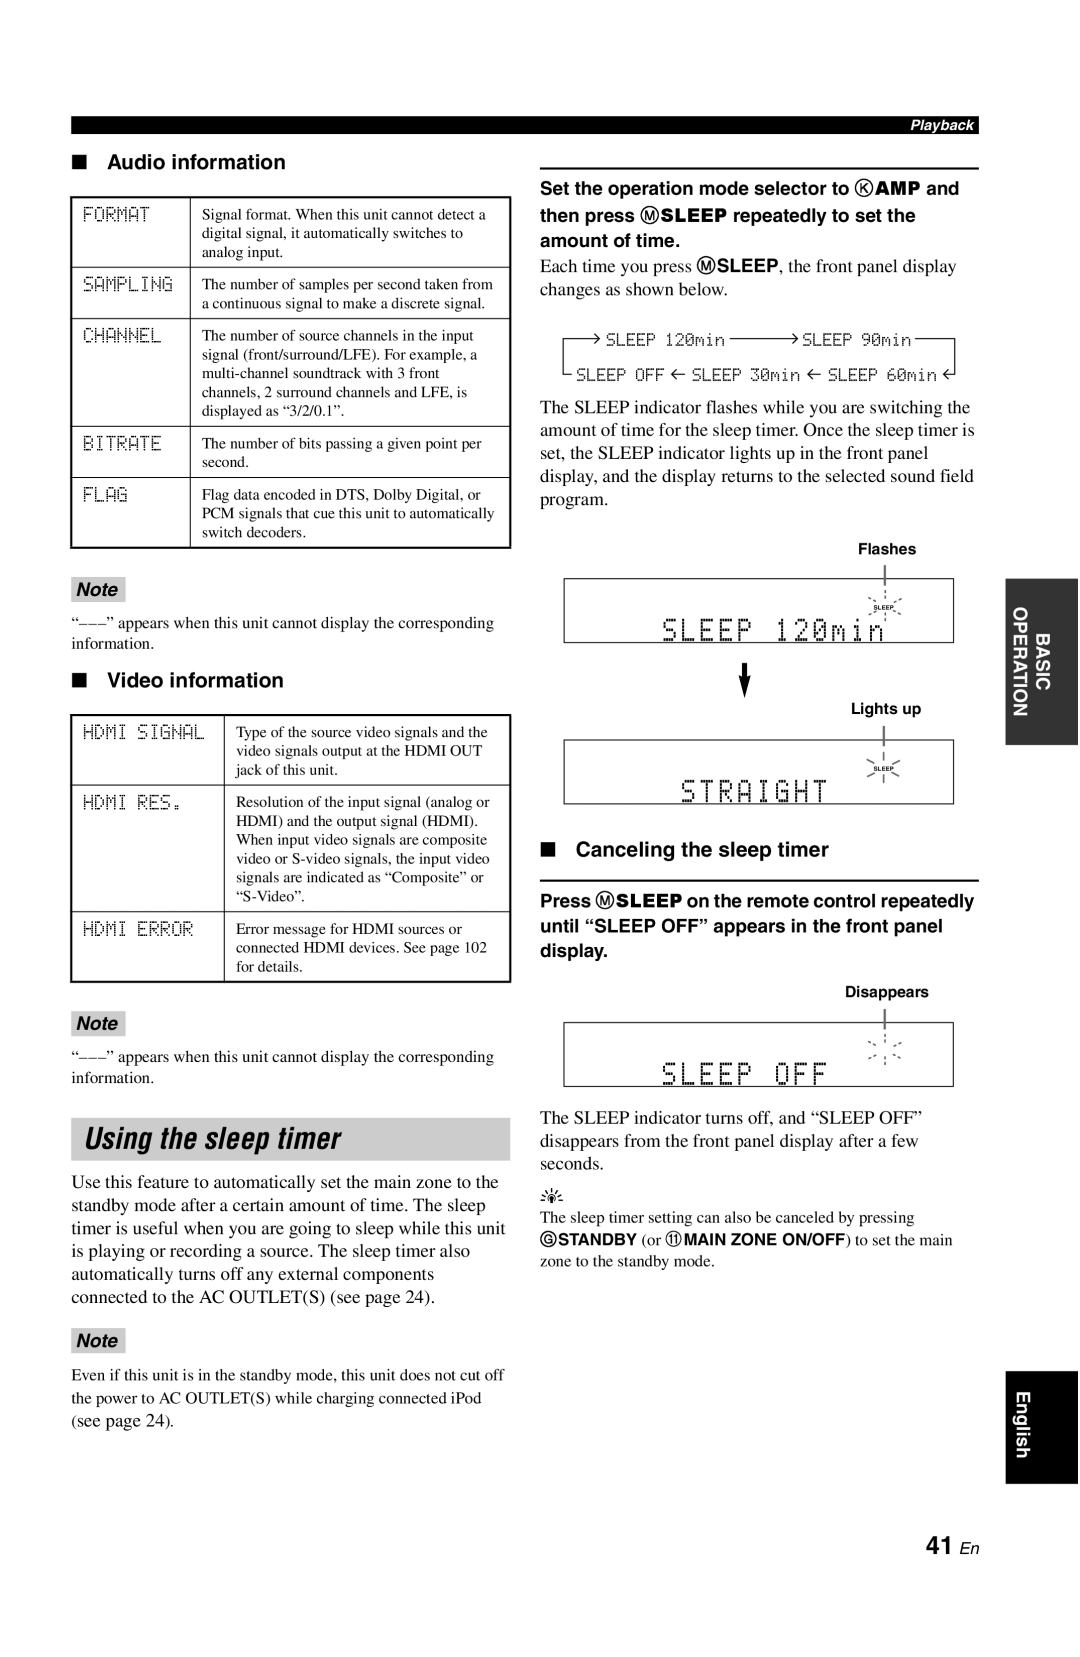 Yamaha RX-V861 owner manual Using the sleep timer, 41 En, Audio information, Video information, Canceling the sleep timer 